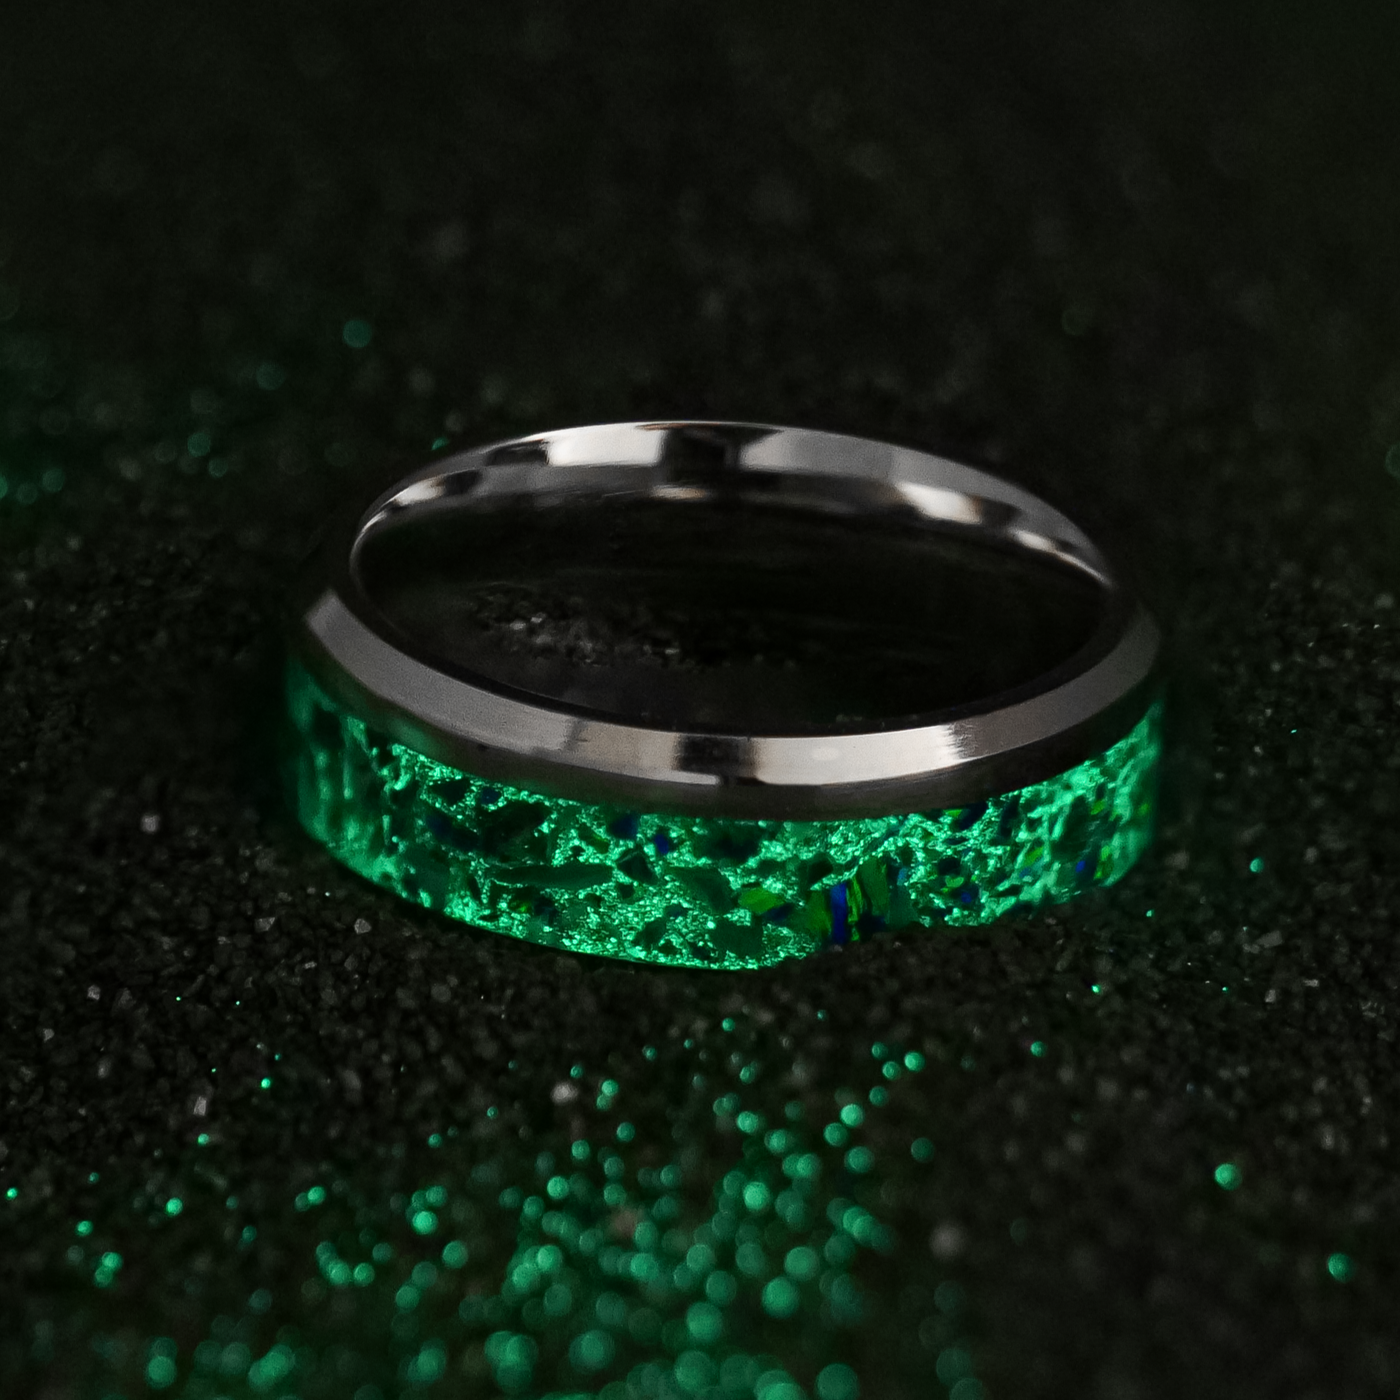 Evergreen Cobalt Chrome Glowstone Ring - Patrick Adair Designs